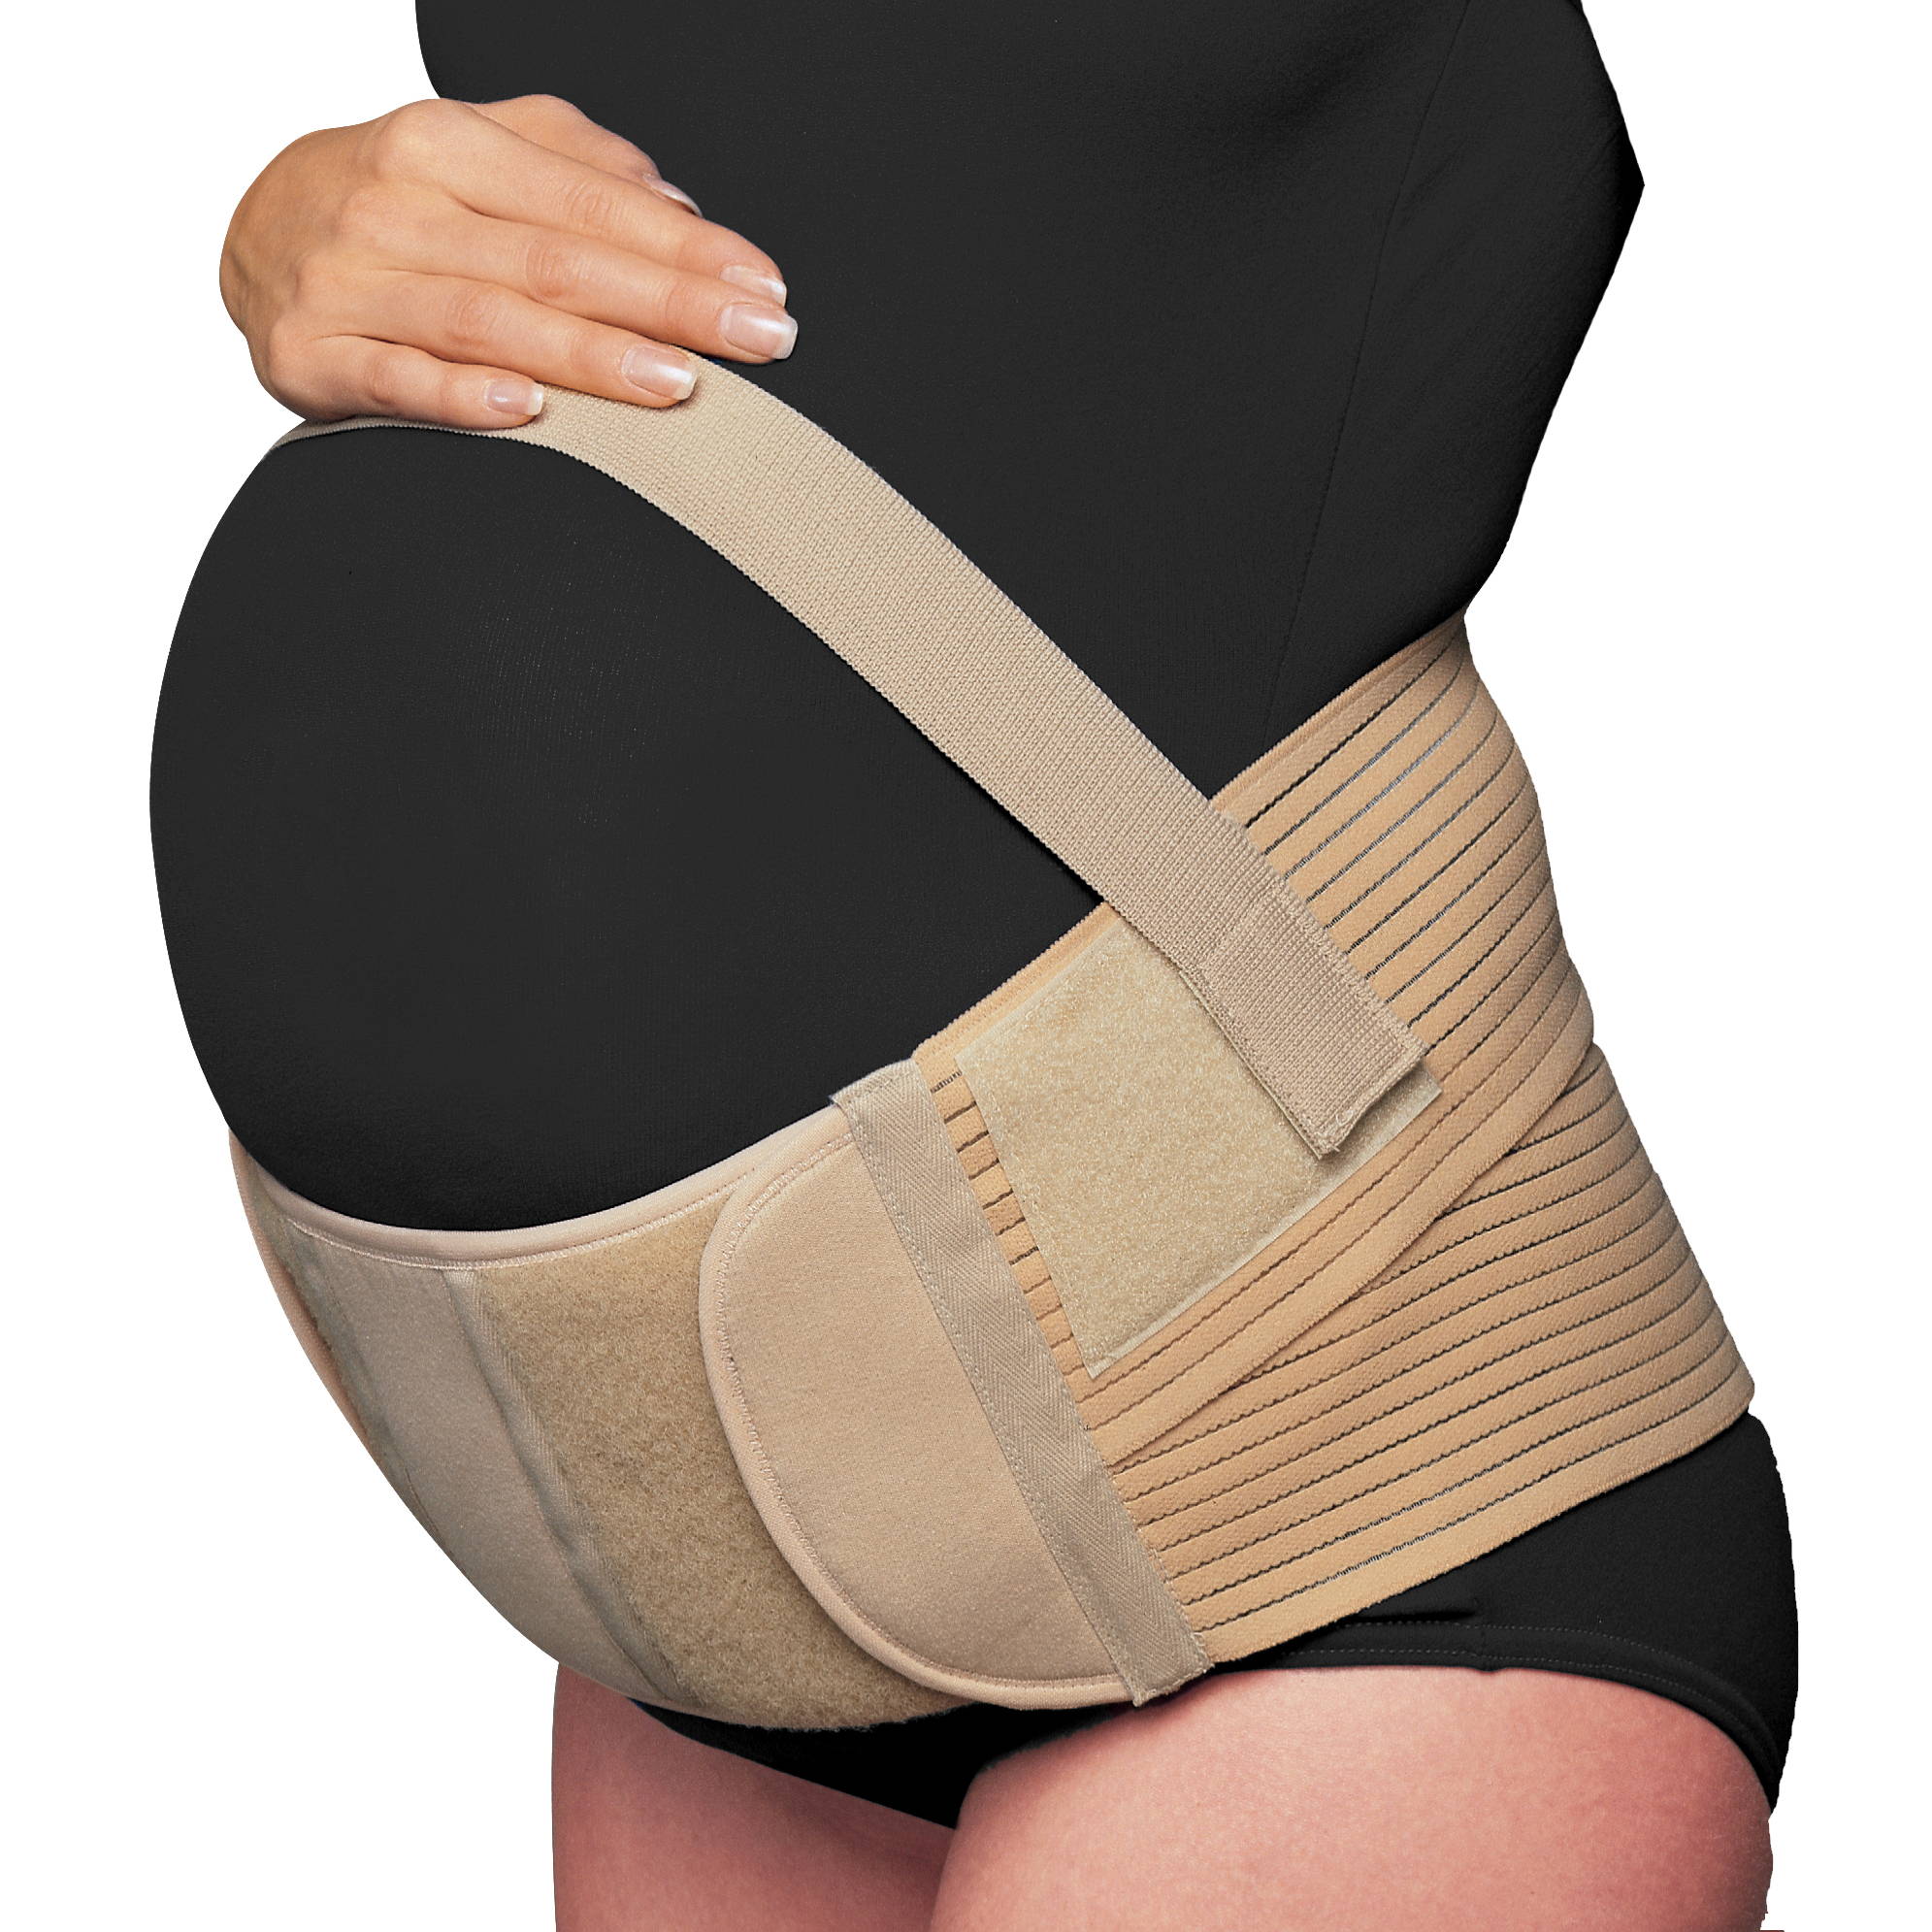 Otc Medium Maternity Support Beige Medium (6-14) Previouse Dress Size - Ea/1 - Home Health Store Inc